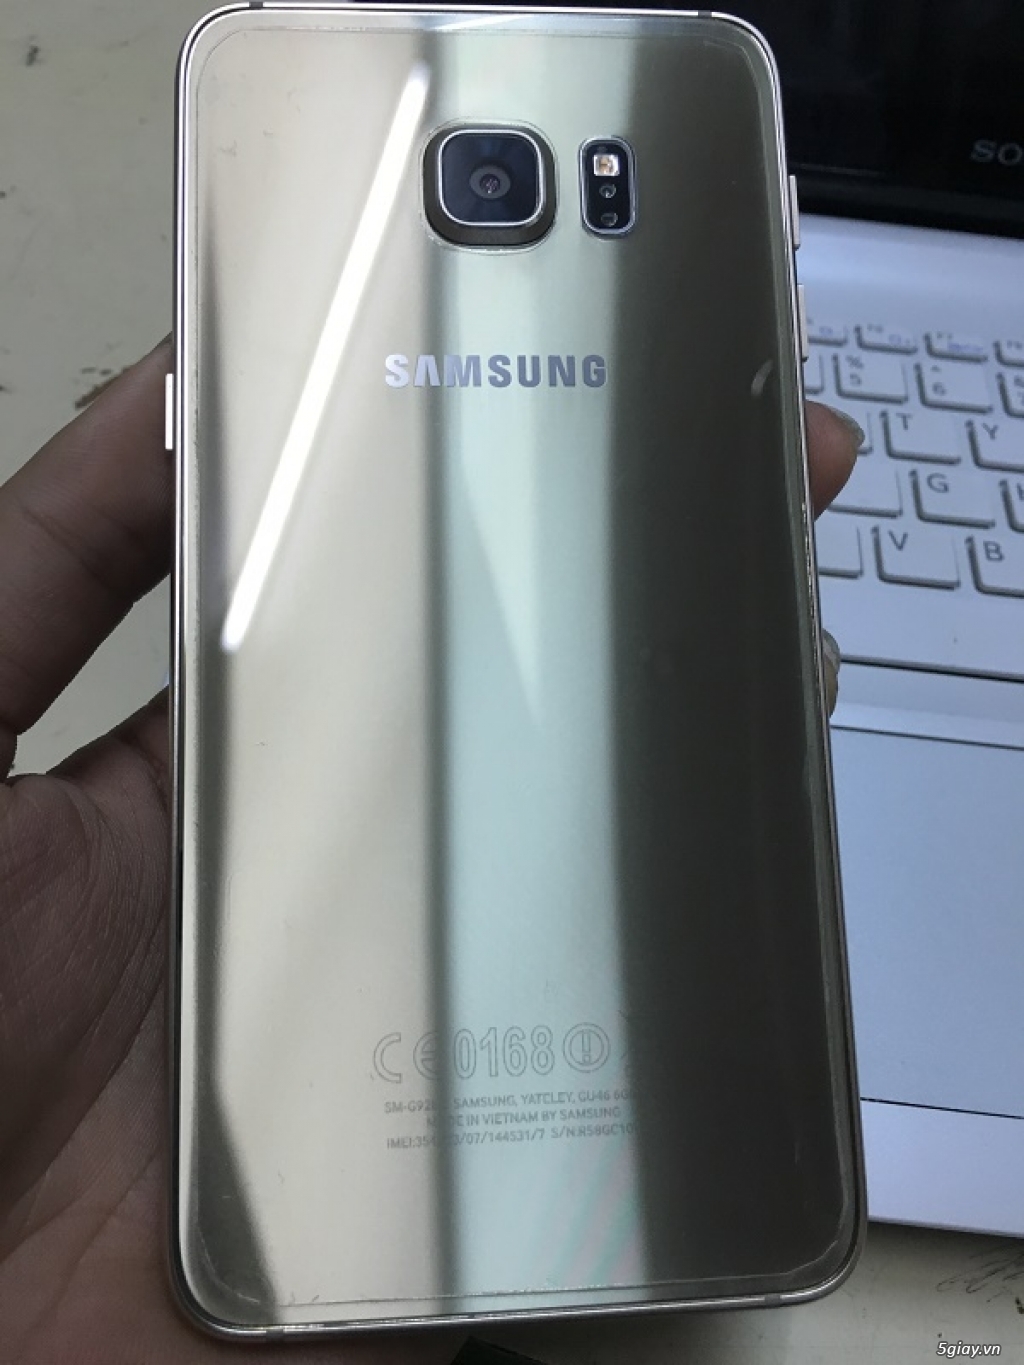 Samsung S6 Edge Plus Gold Platinum BH đến 27/3/2017 - 2